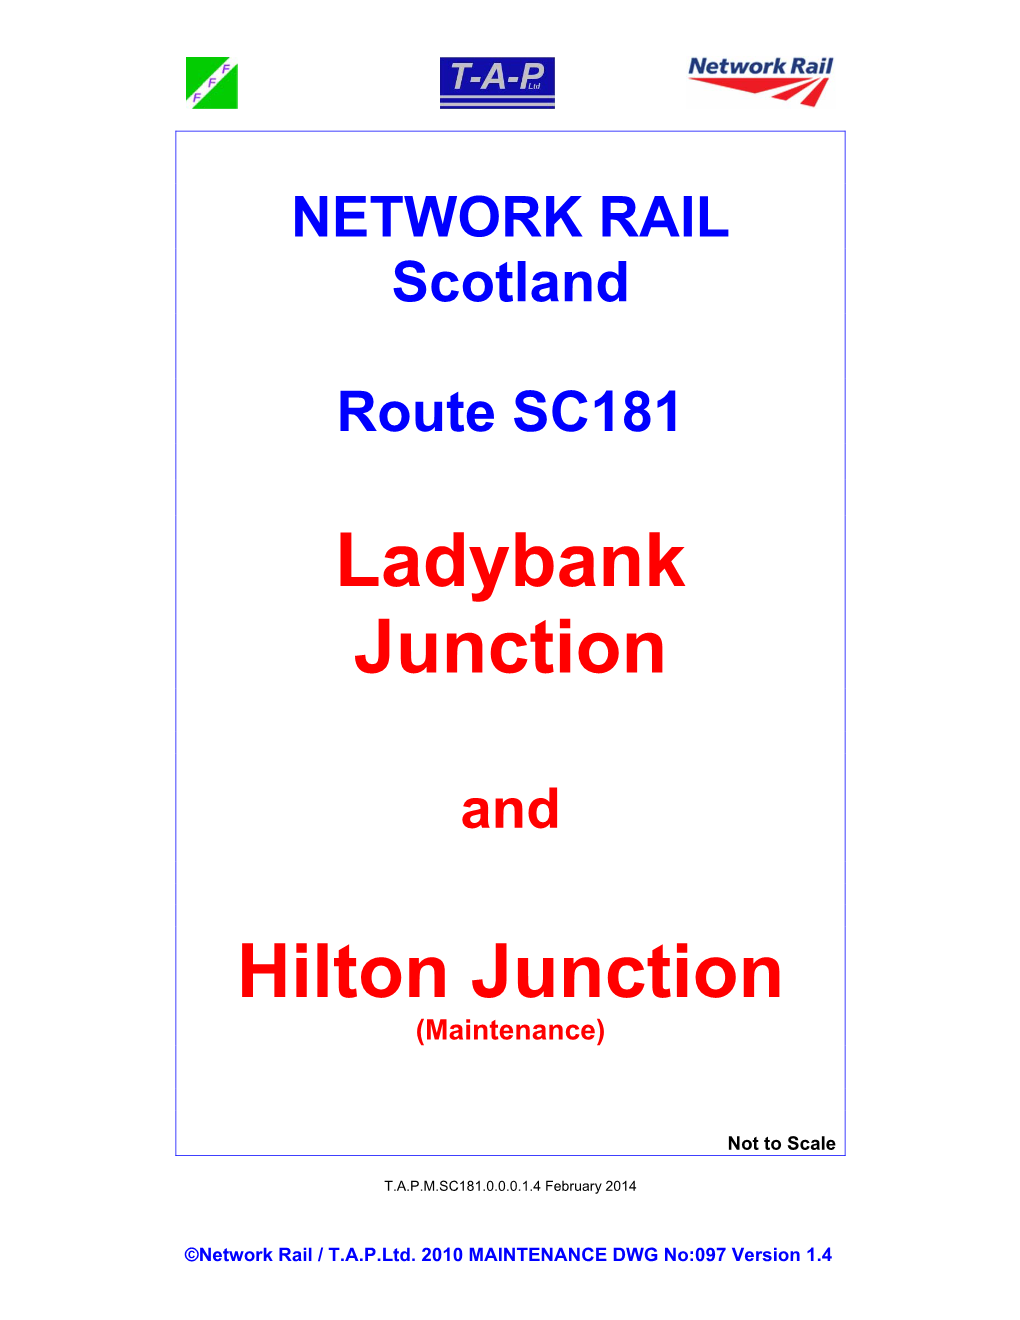 Ladybank Junction Hilton Junction